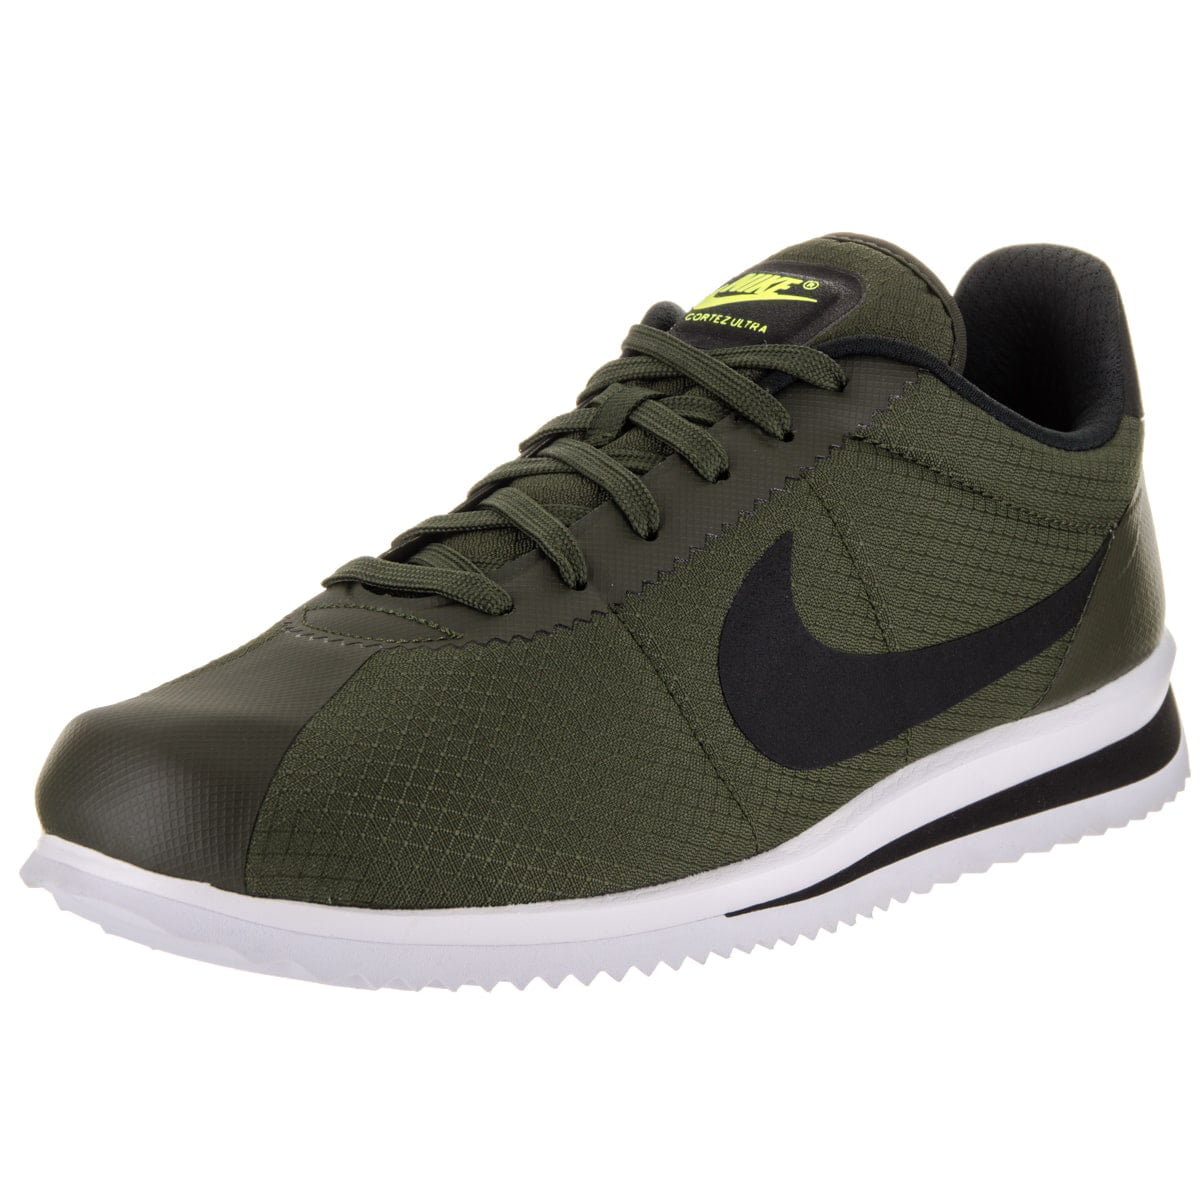  Nike  Nike  Men s Cortez  Ultra Green  Textile Casual Shoes 